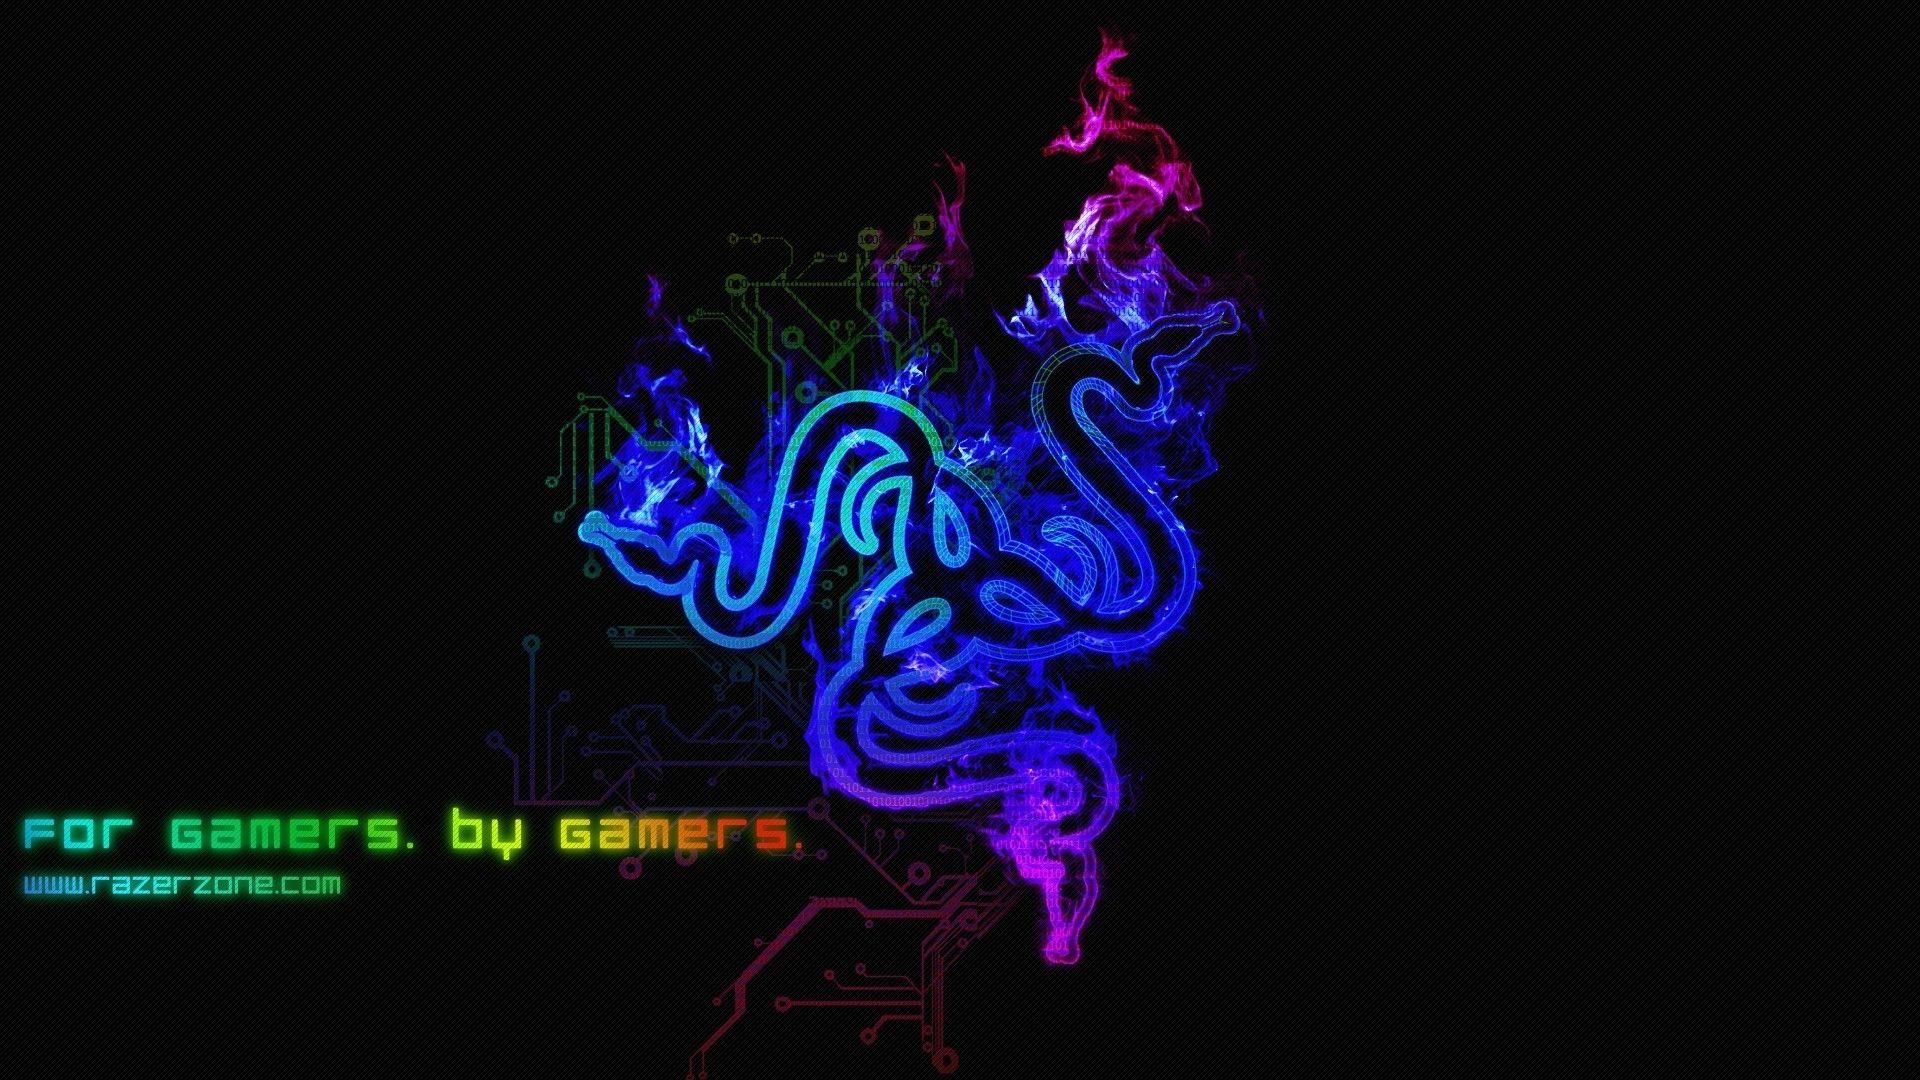 Razer 4k Gaming Wallpaper, Animated desktop wallpaper for PC, 4K HDR, RGB 